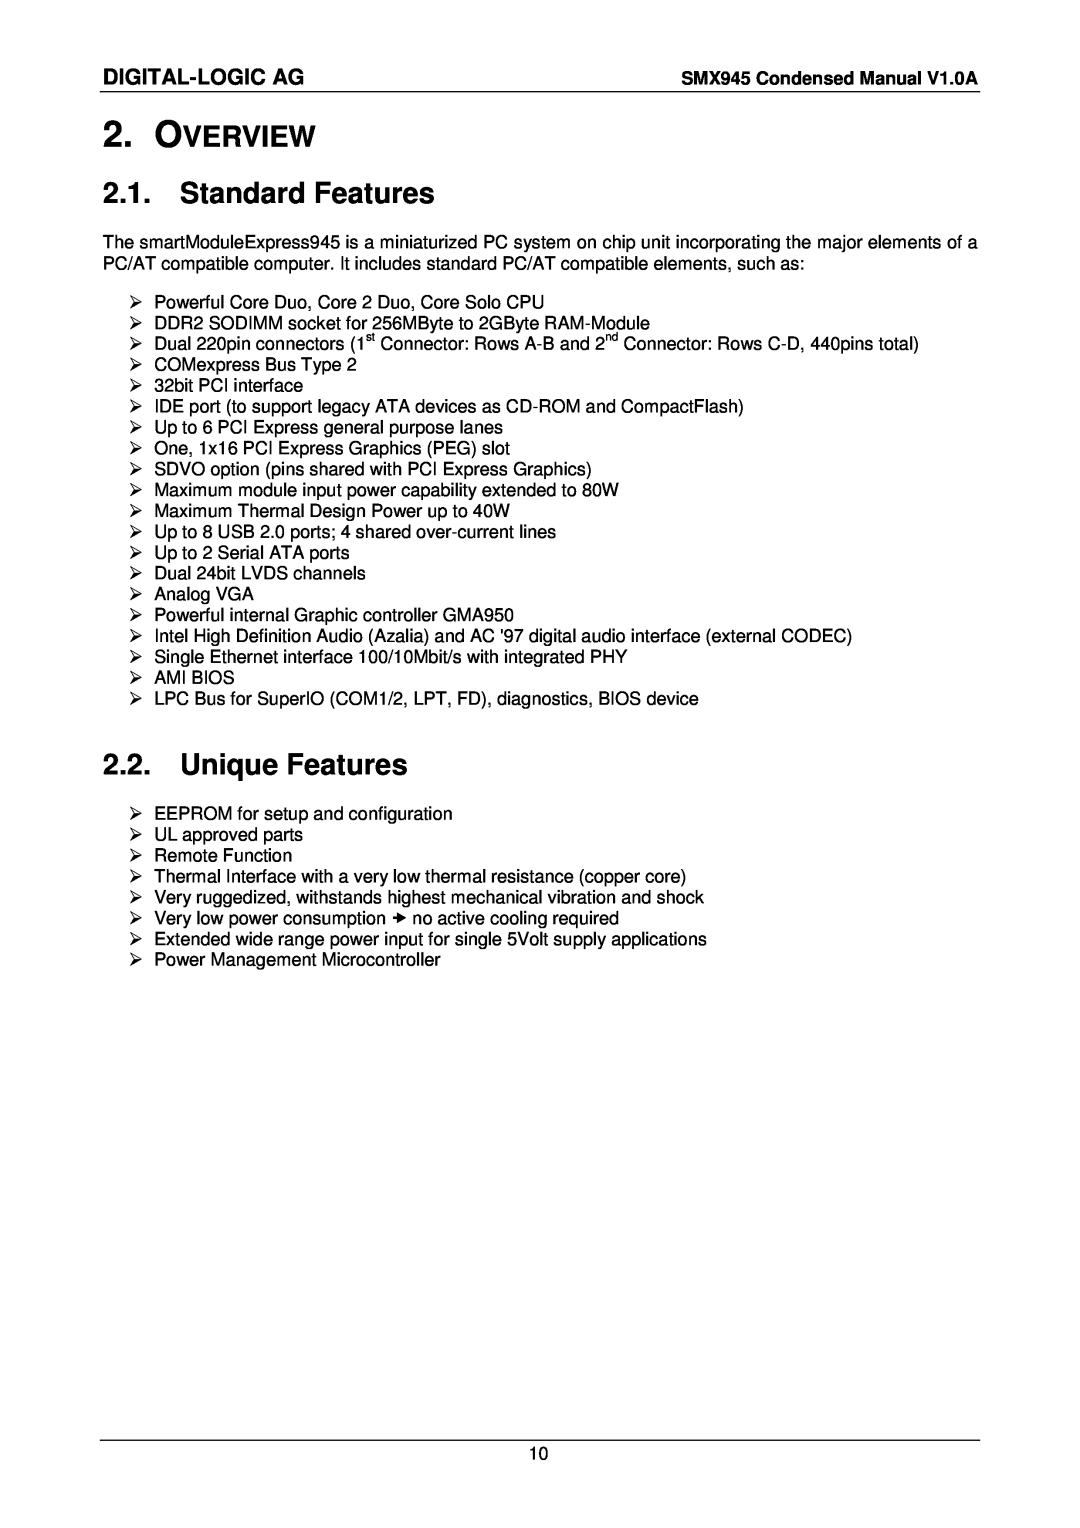 Compaq SMX945 user manual OVERVIEW 2.1. Standard Features, Unique Features, Digital-Logic Ag 